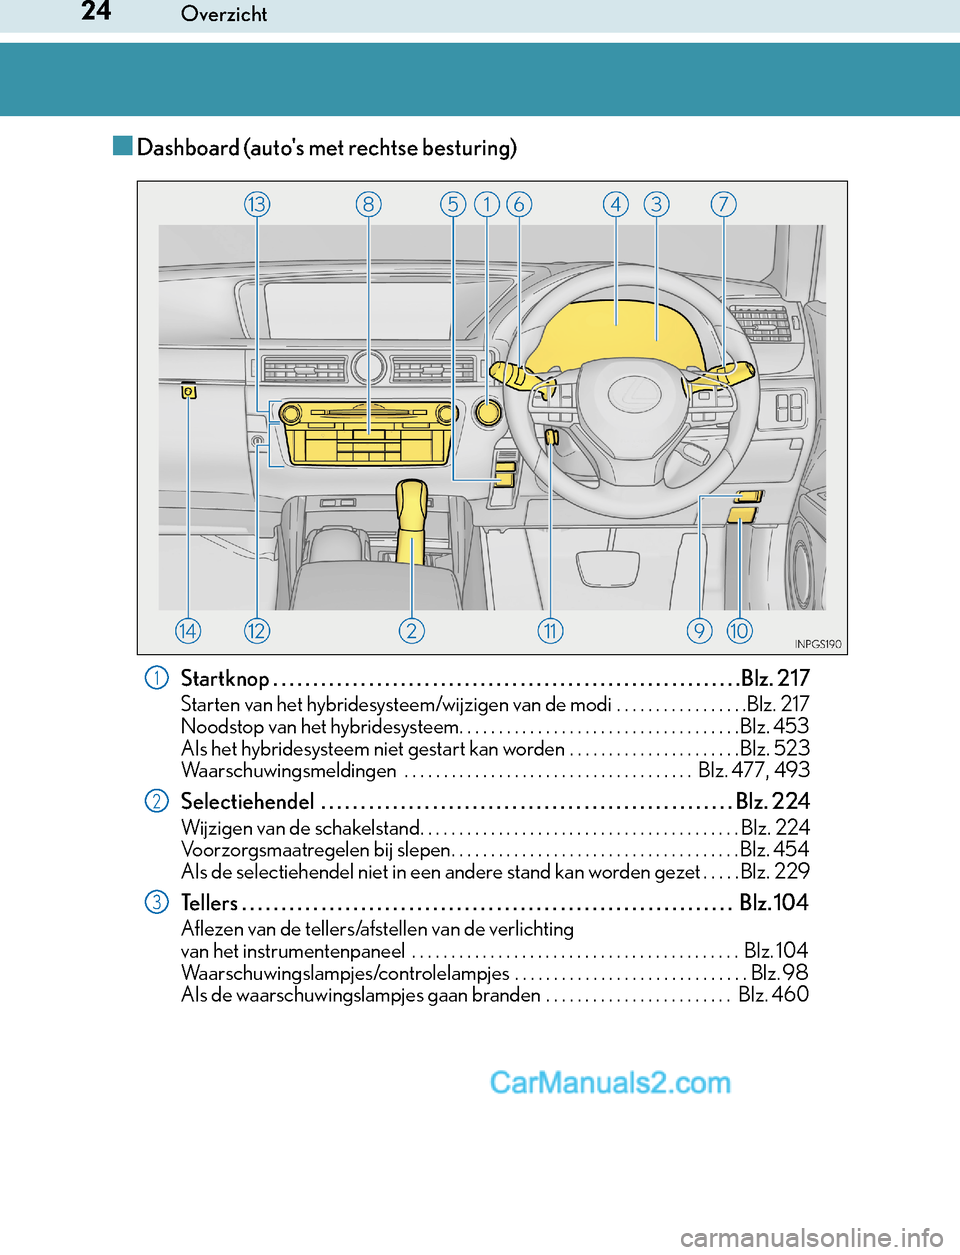 Lexus GS300h 2017  Handleiding (in Dutch) 24Overzicht
GS450h_300h_OM_OM30F92E_(EE)
■Dashboard (autos met rechtse besturing)
Startknop . . . . . . . . . . . . . . . . . . . . . . . . . . . . . . . . . . . . . . . . . . . . . . . . . . . . .